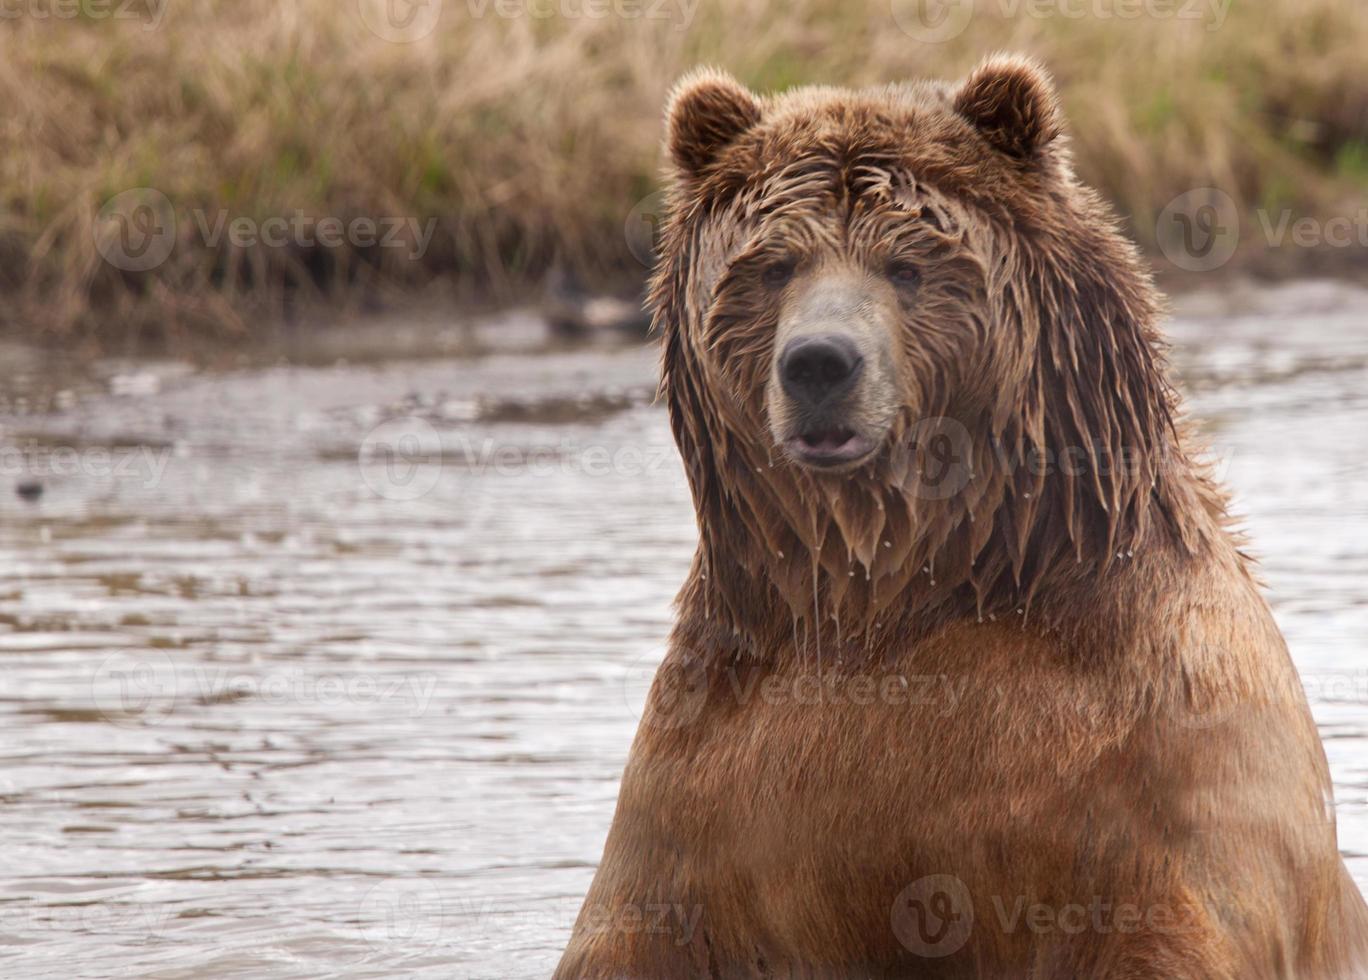 oso kodiak mojado en el agua foto